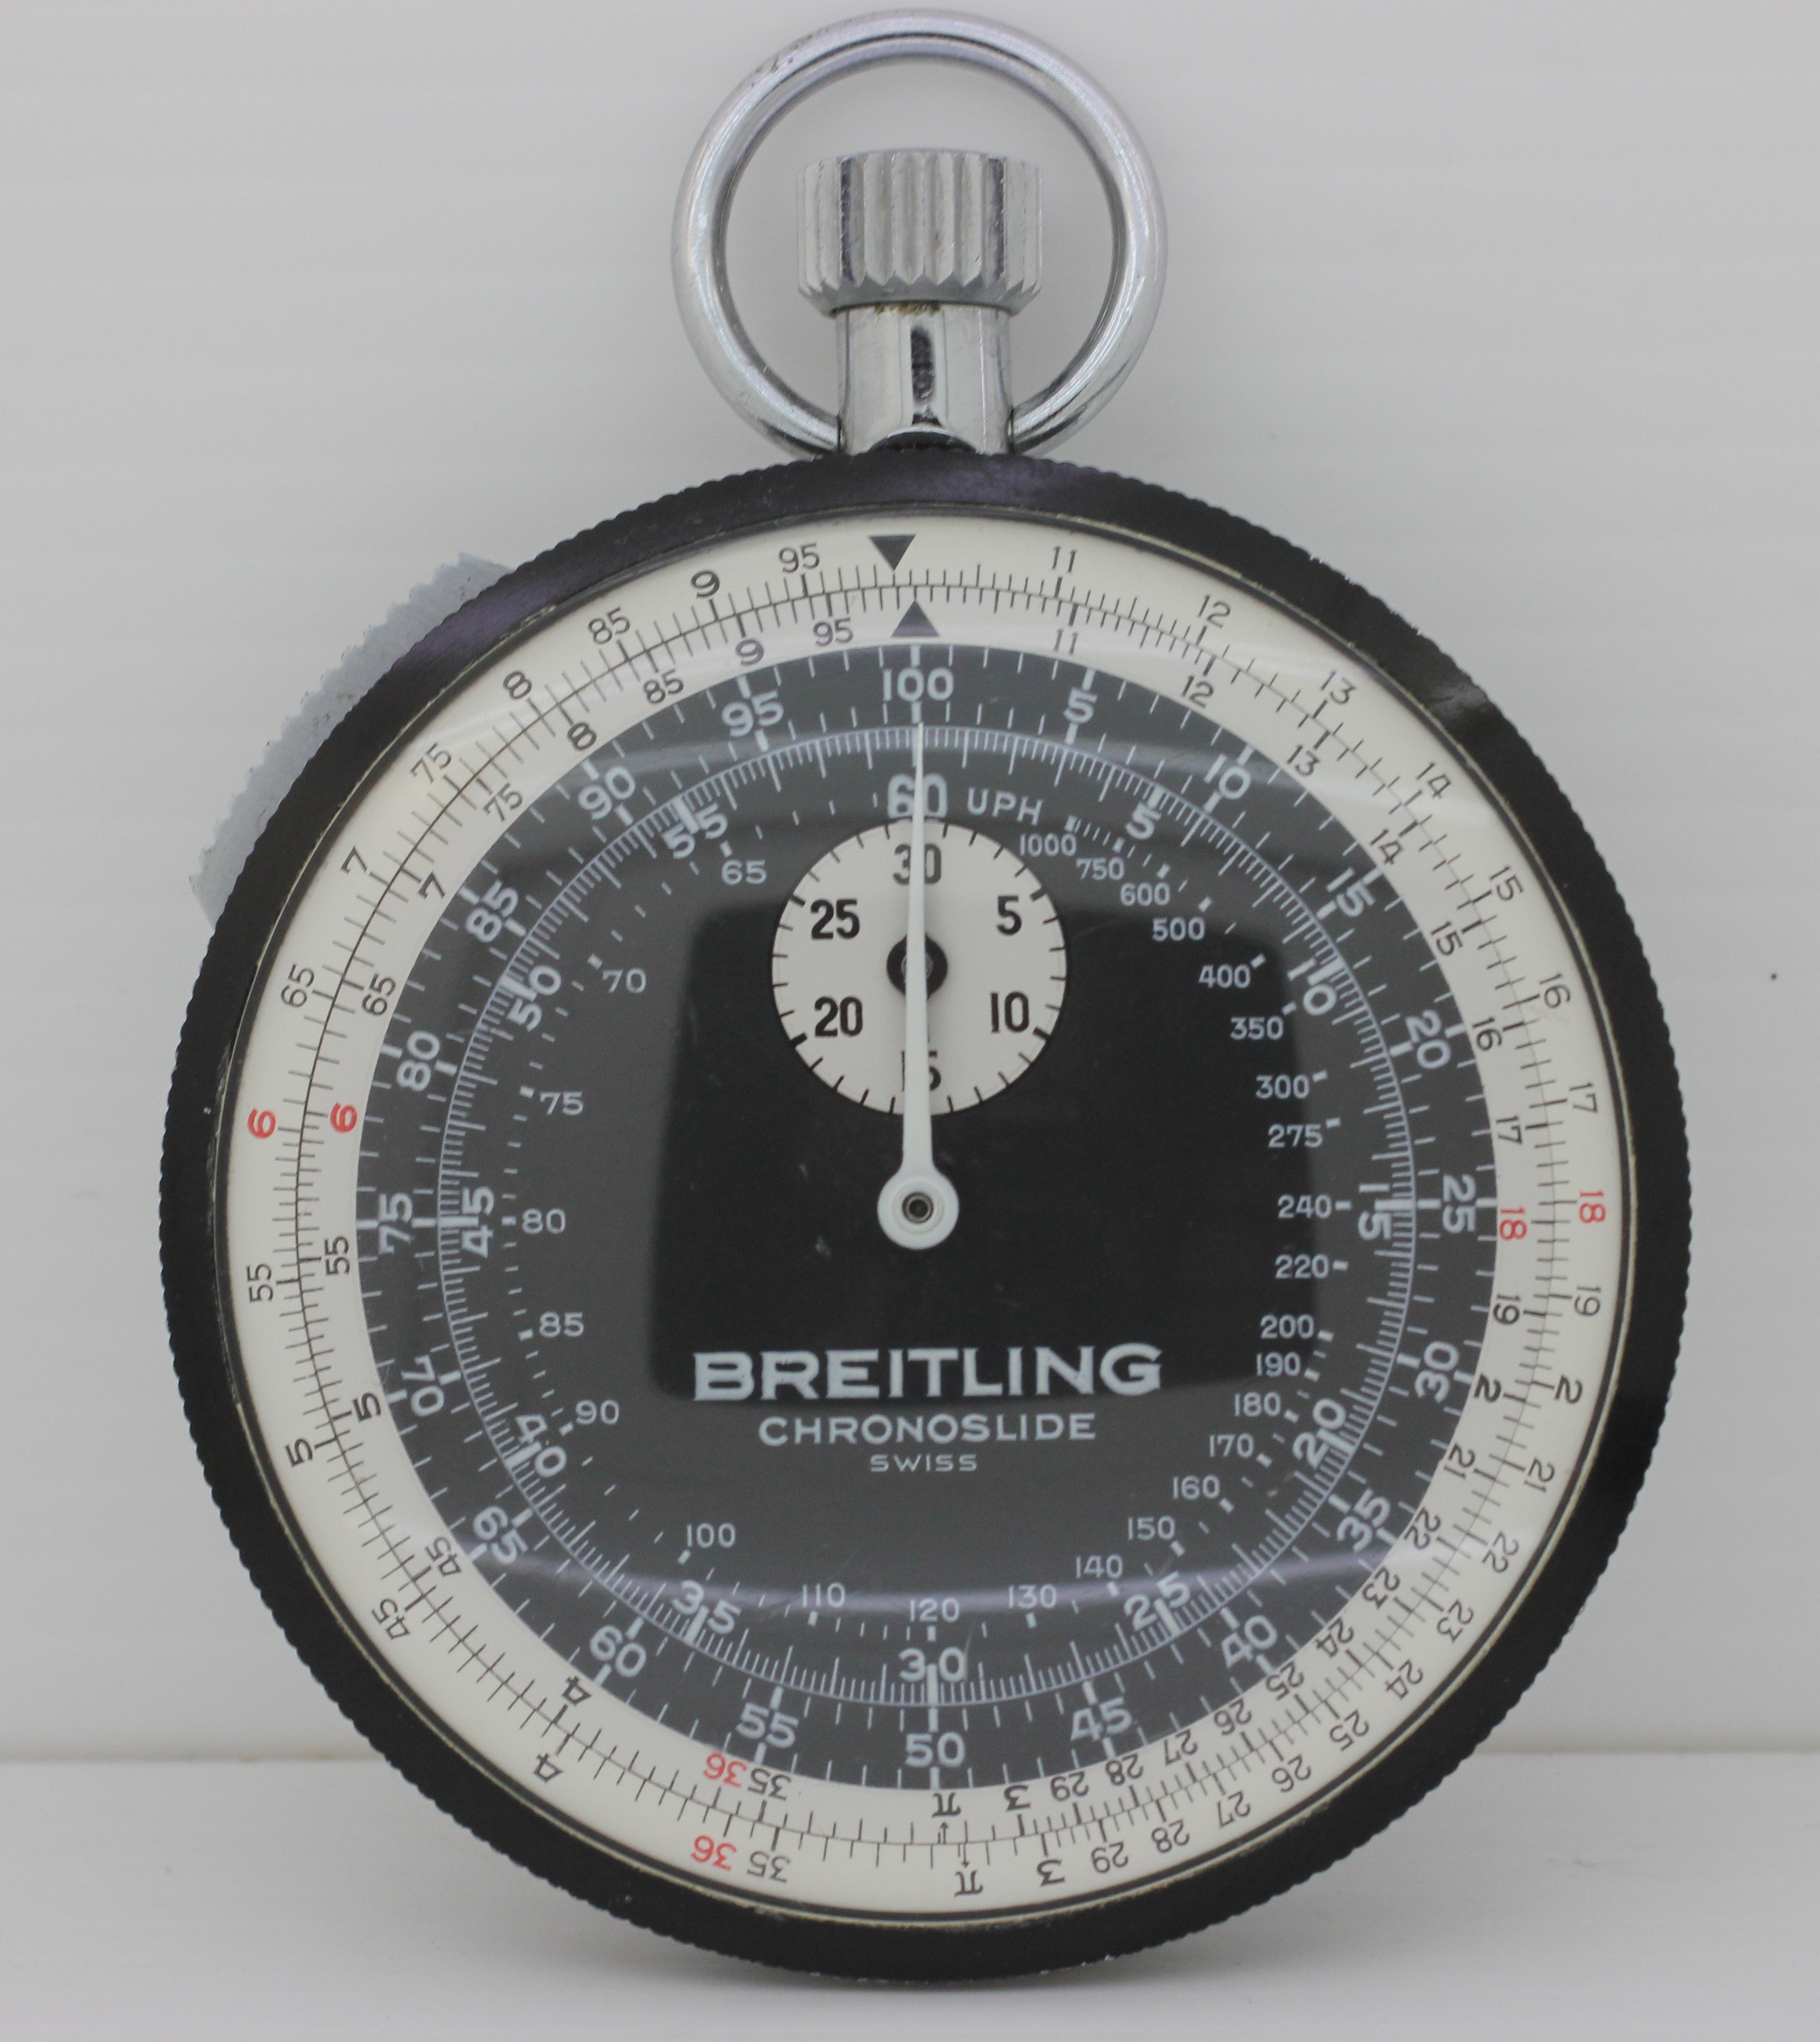 Rare Vintage 1968 Breitling Chronoslide Stopwatch - 01577 - Box & Papers